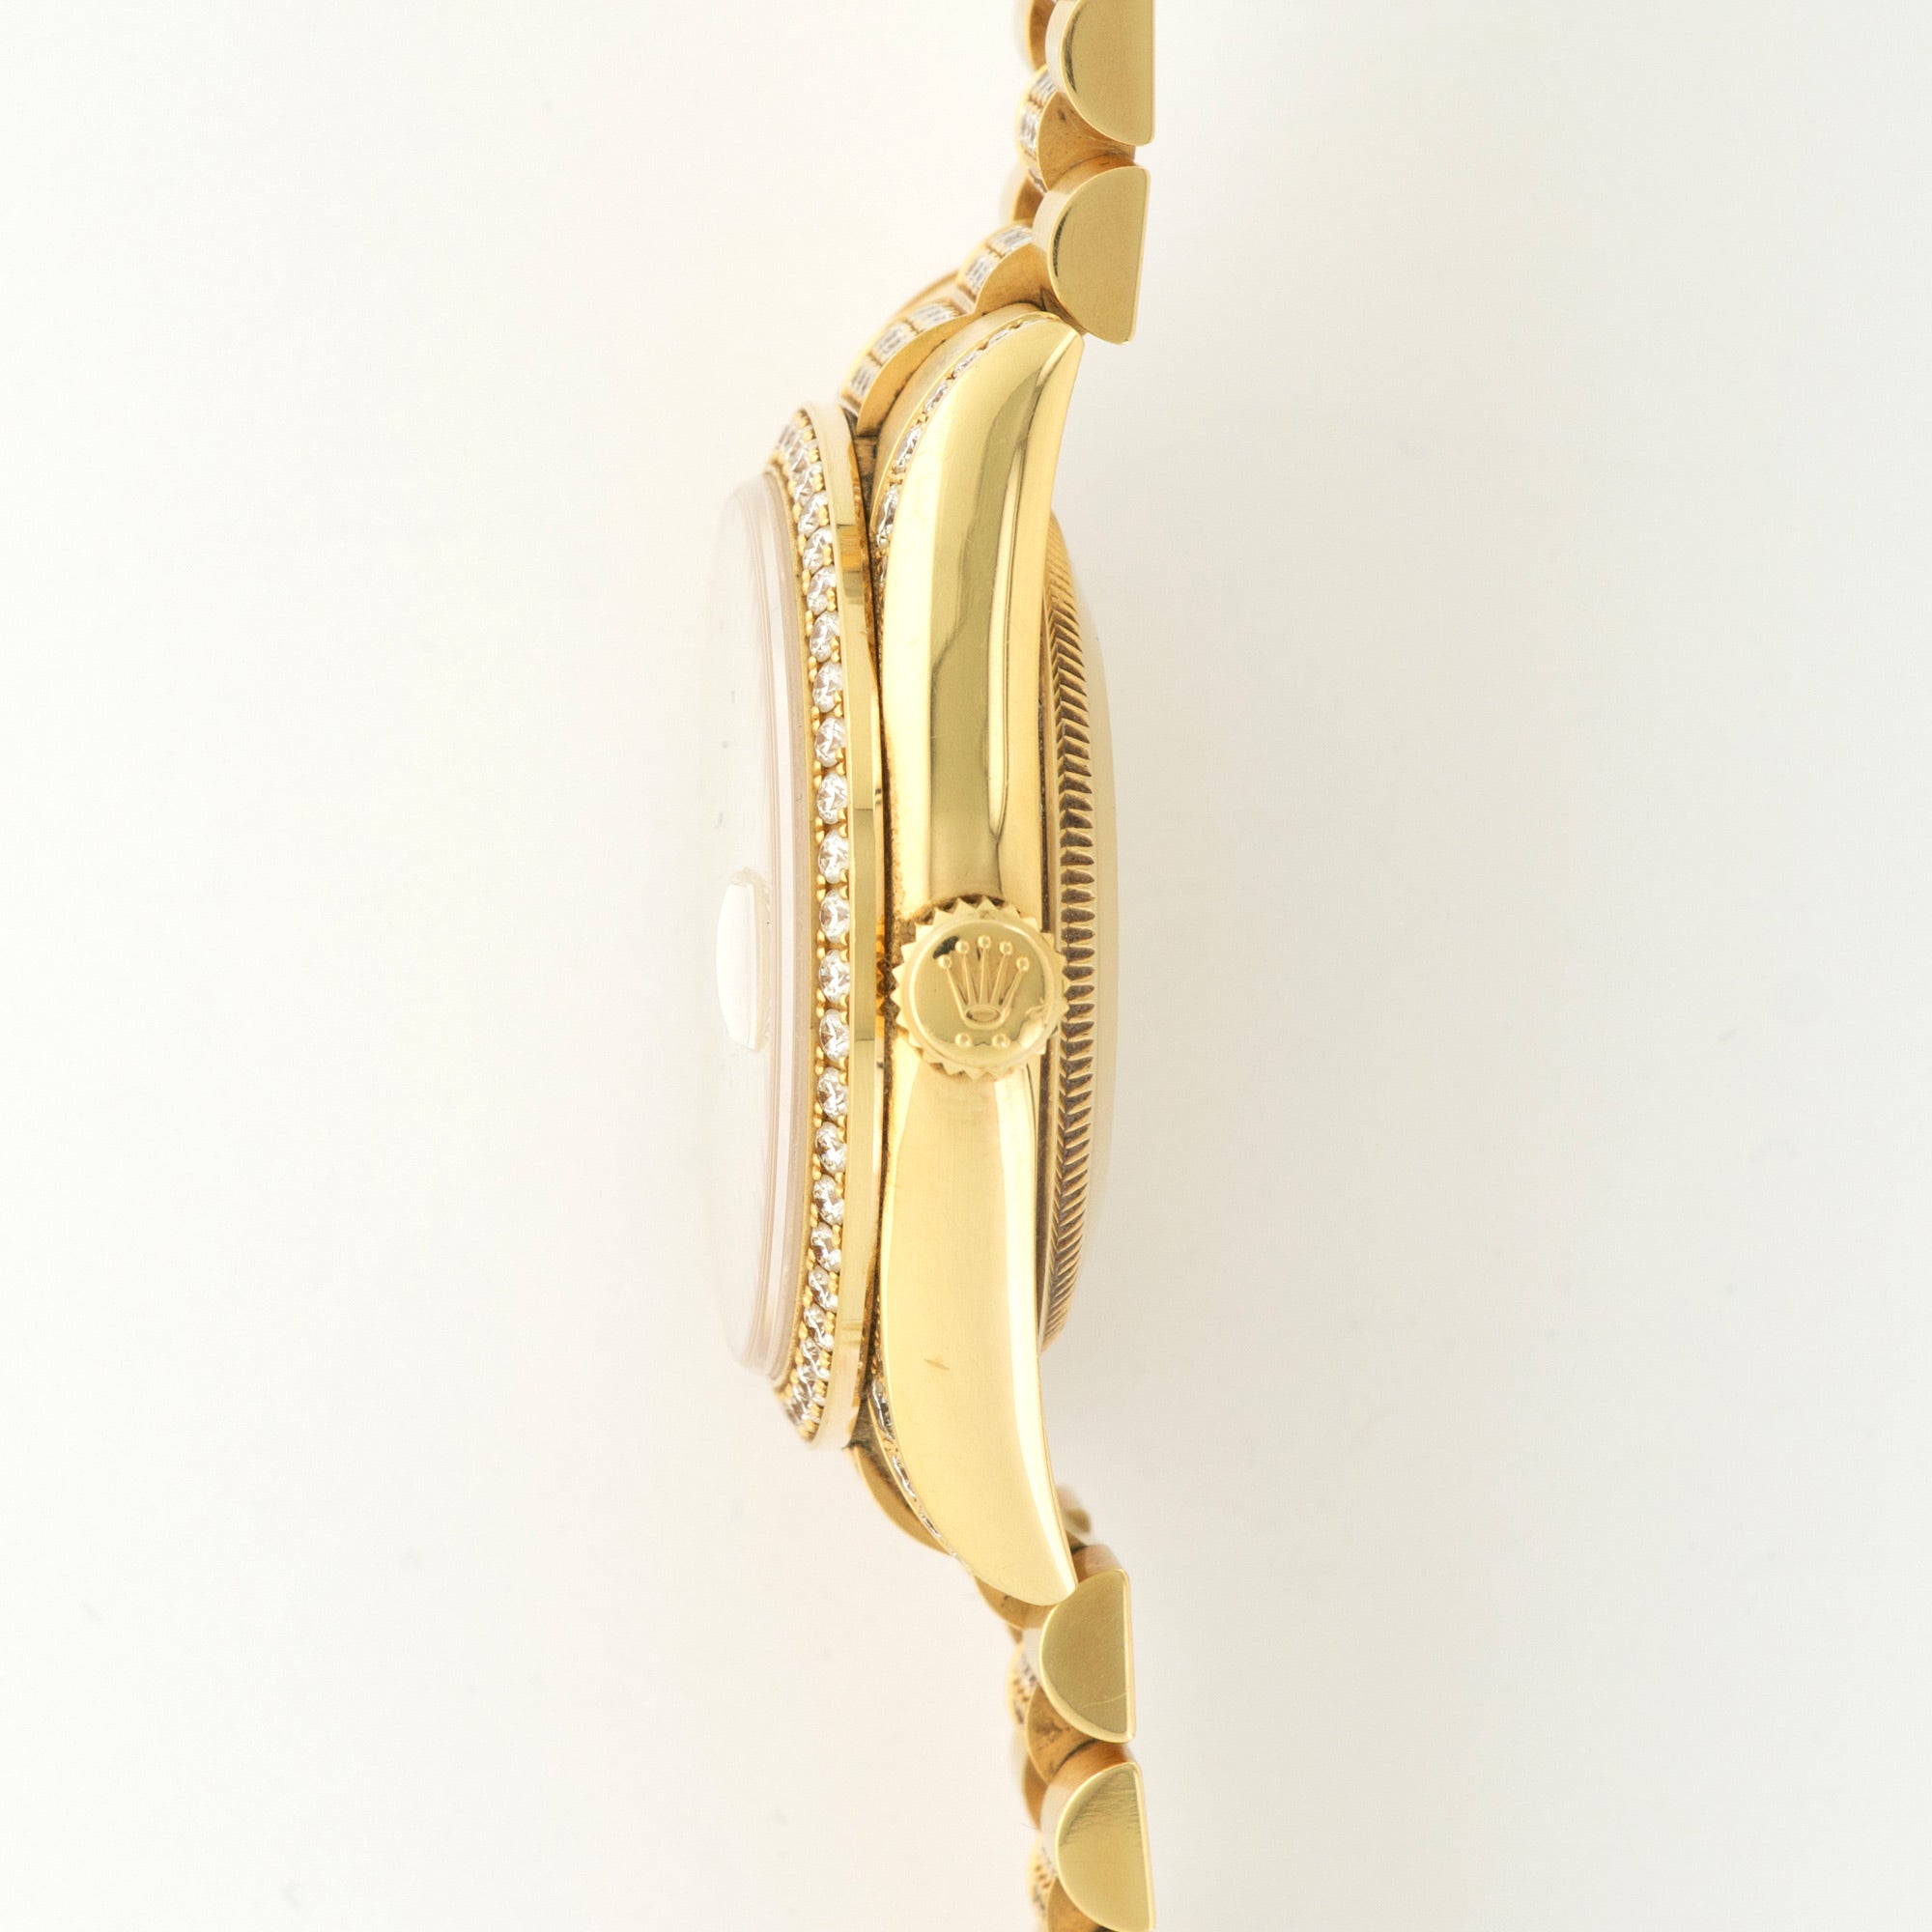 Rolex - Rolex Yellow Gold Day-Date Full Diamond Watch Ref. 118388 - The Keystone Watches